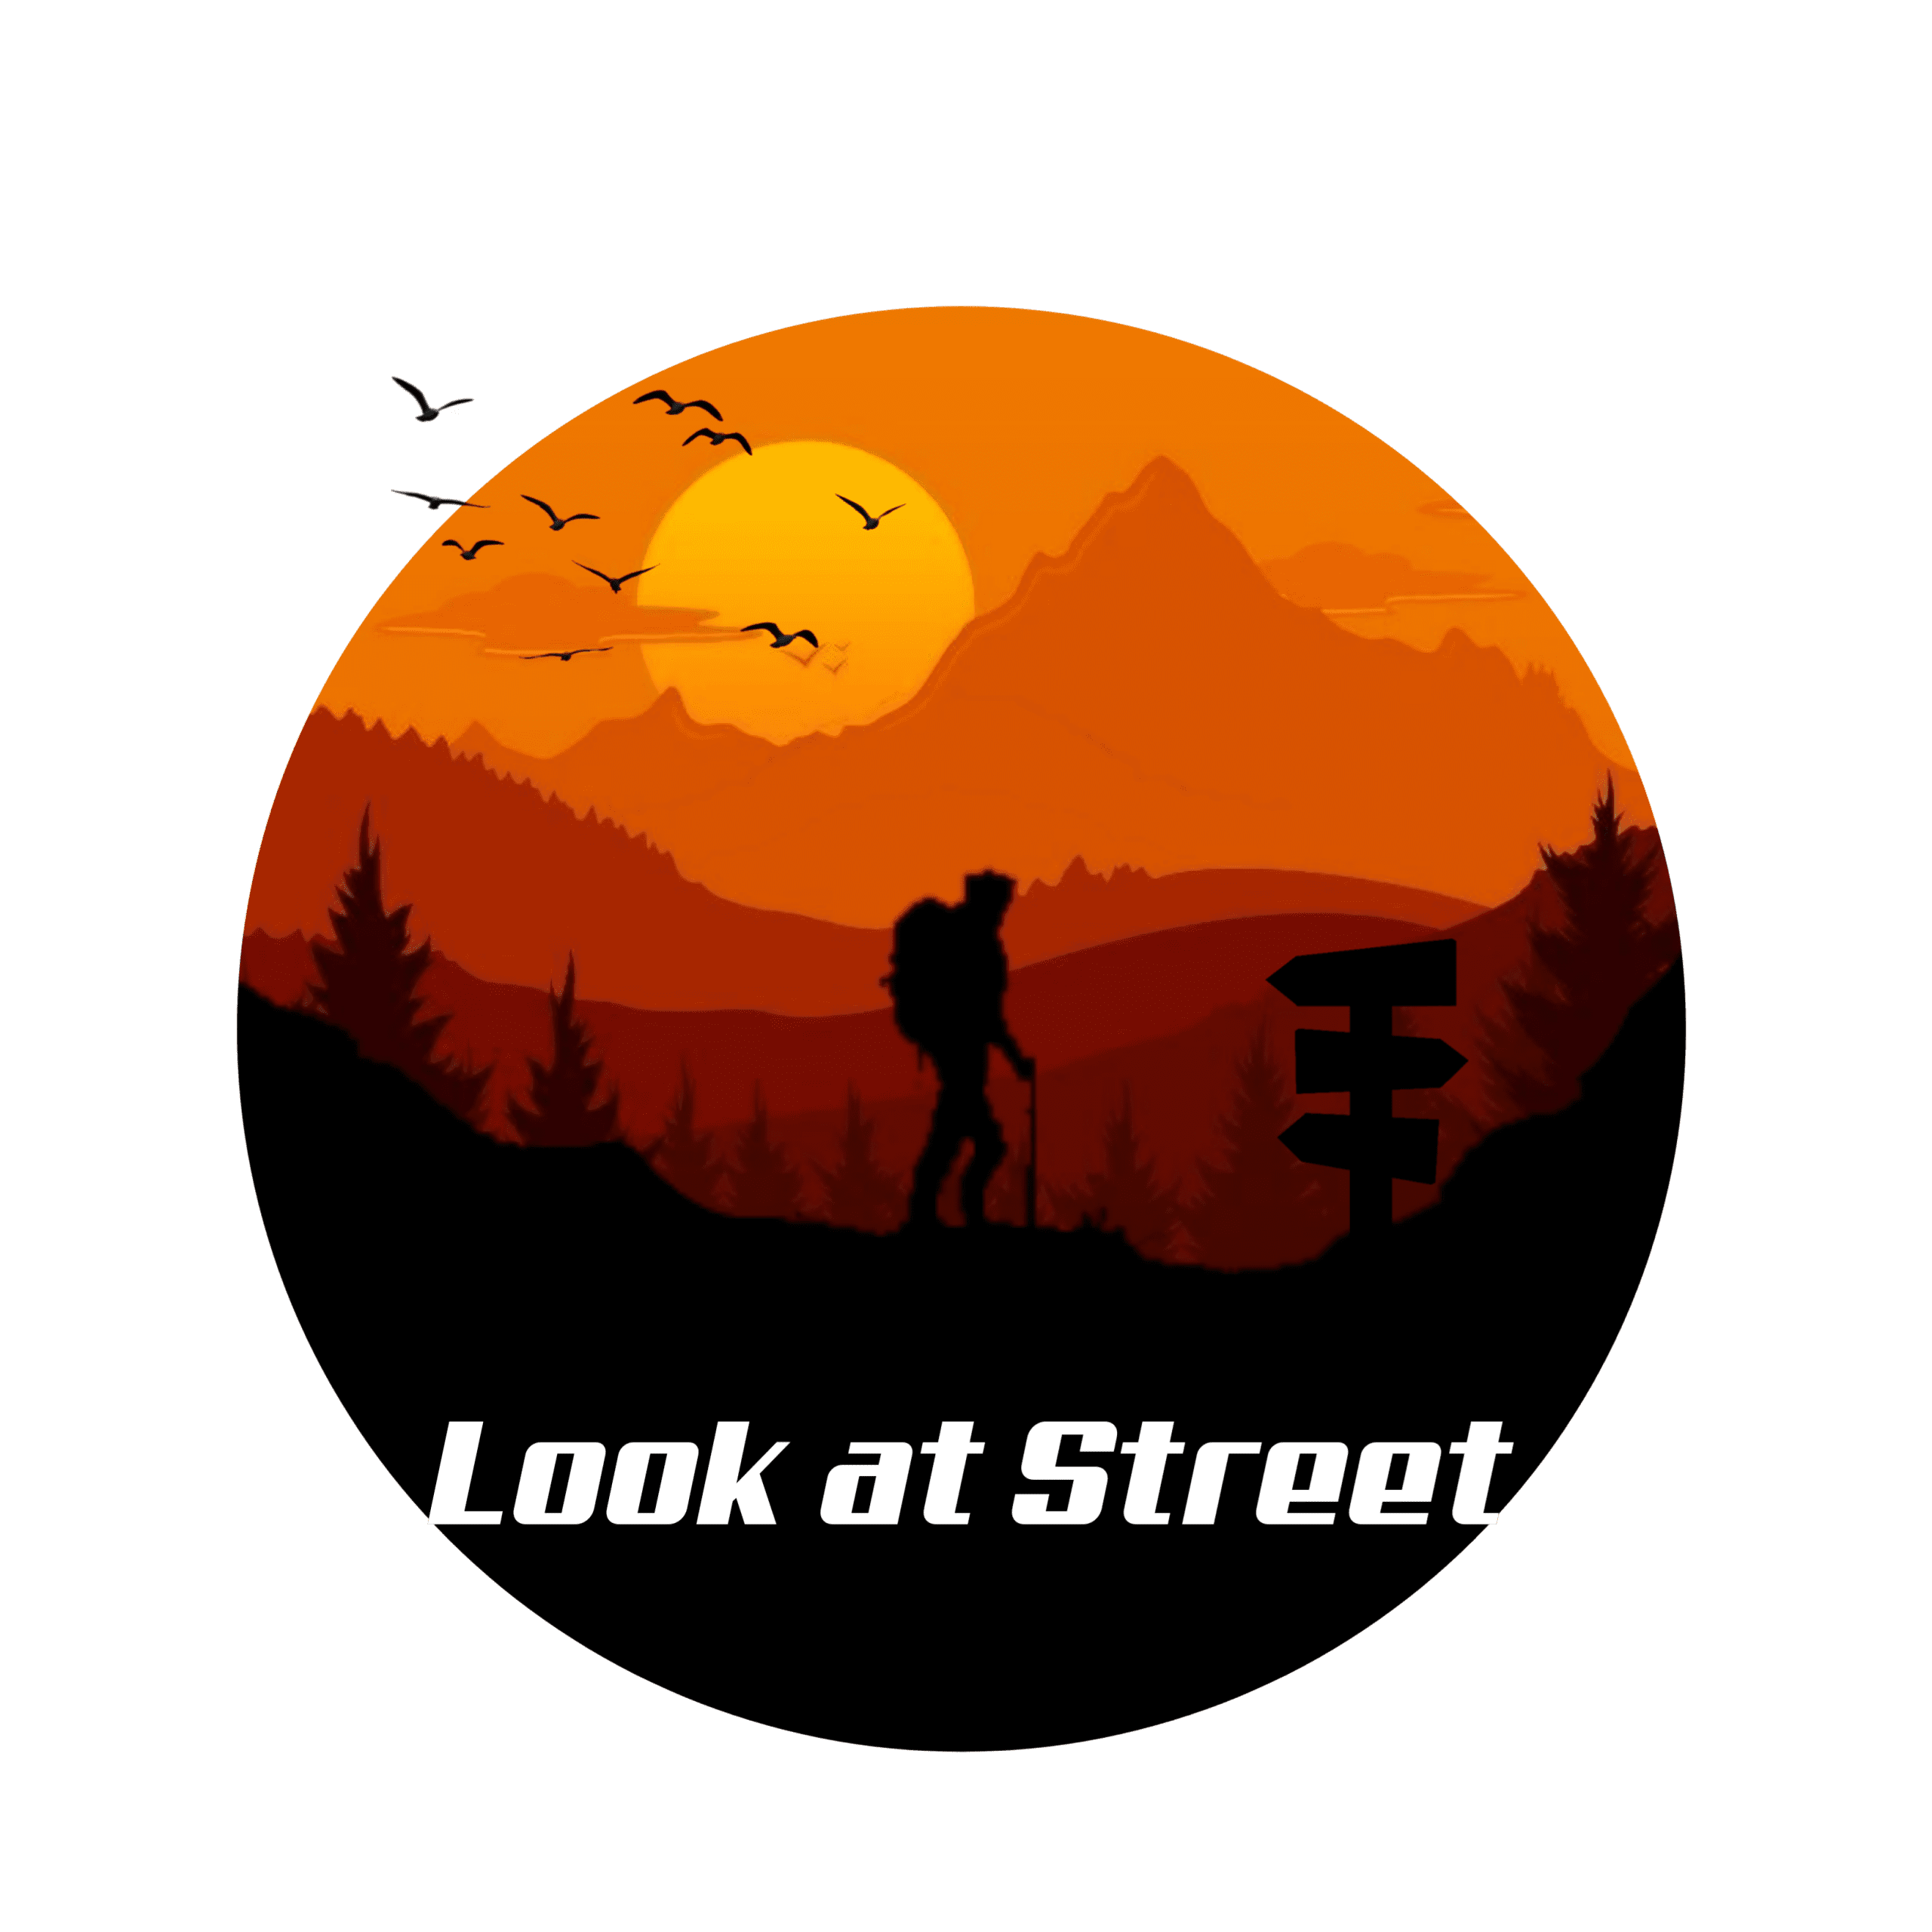 Look at Street